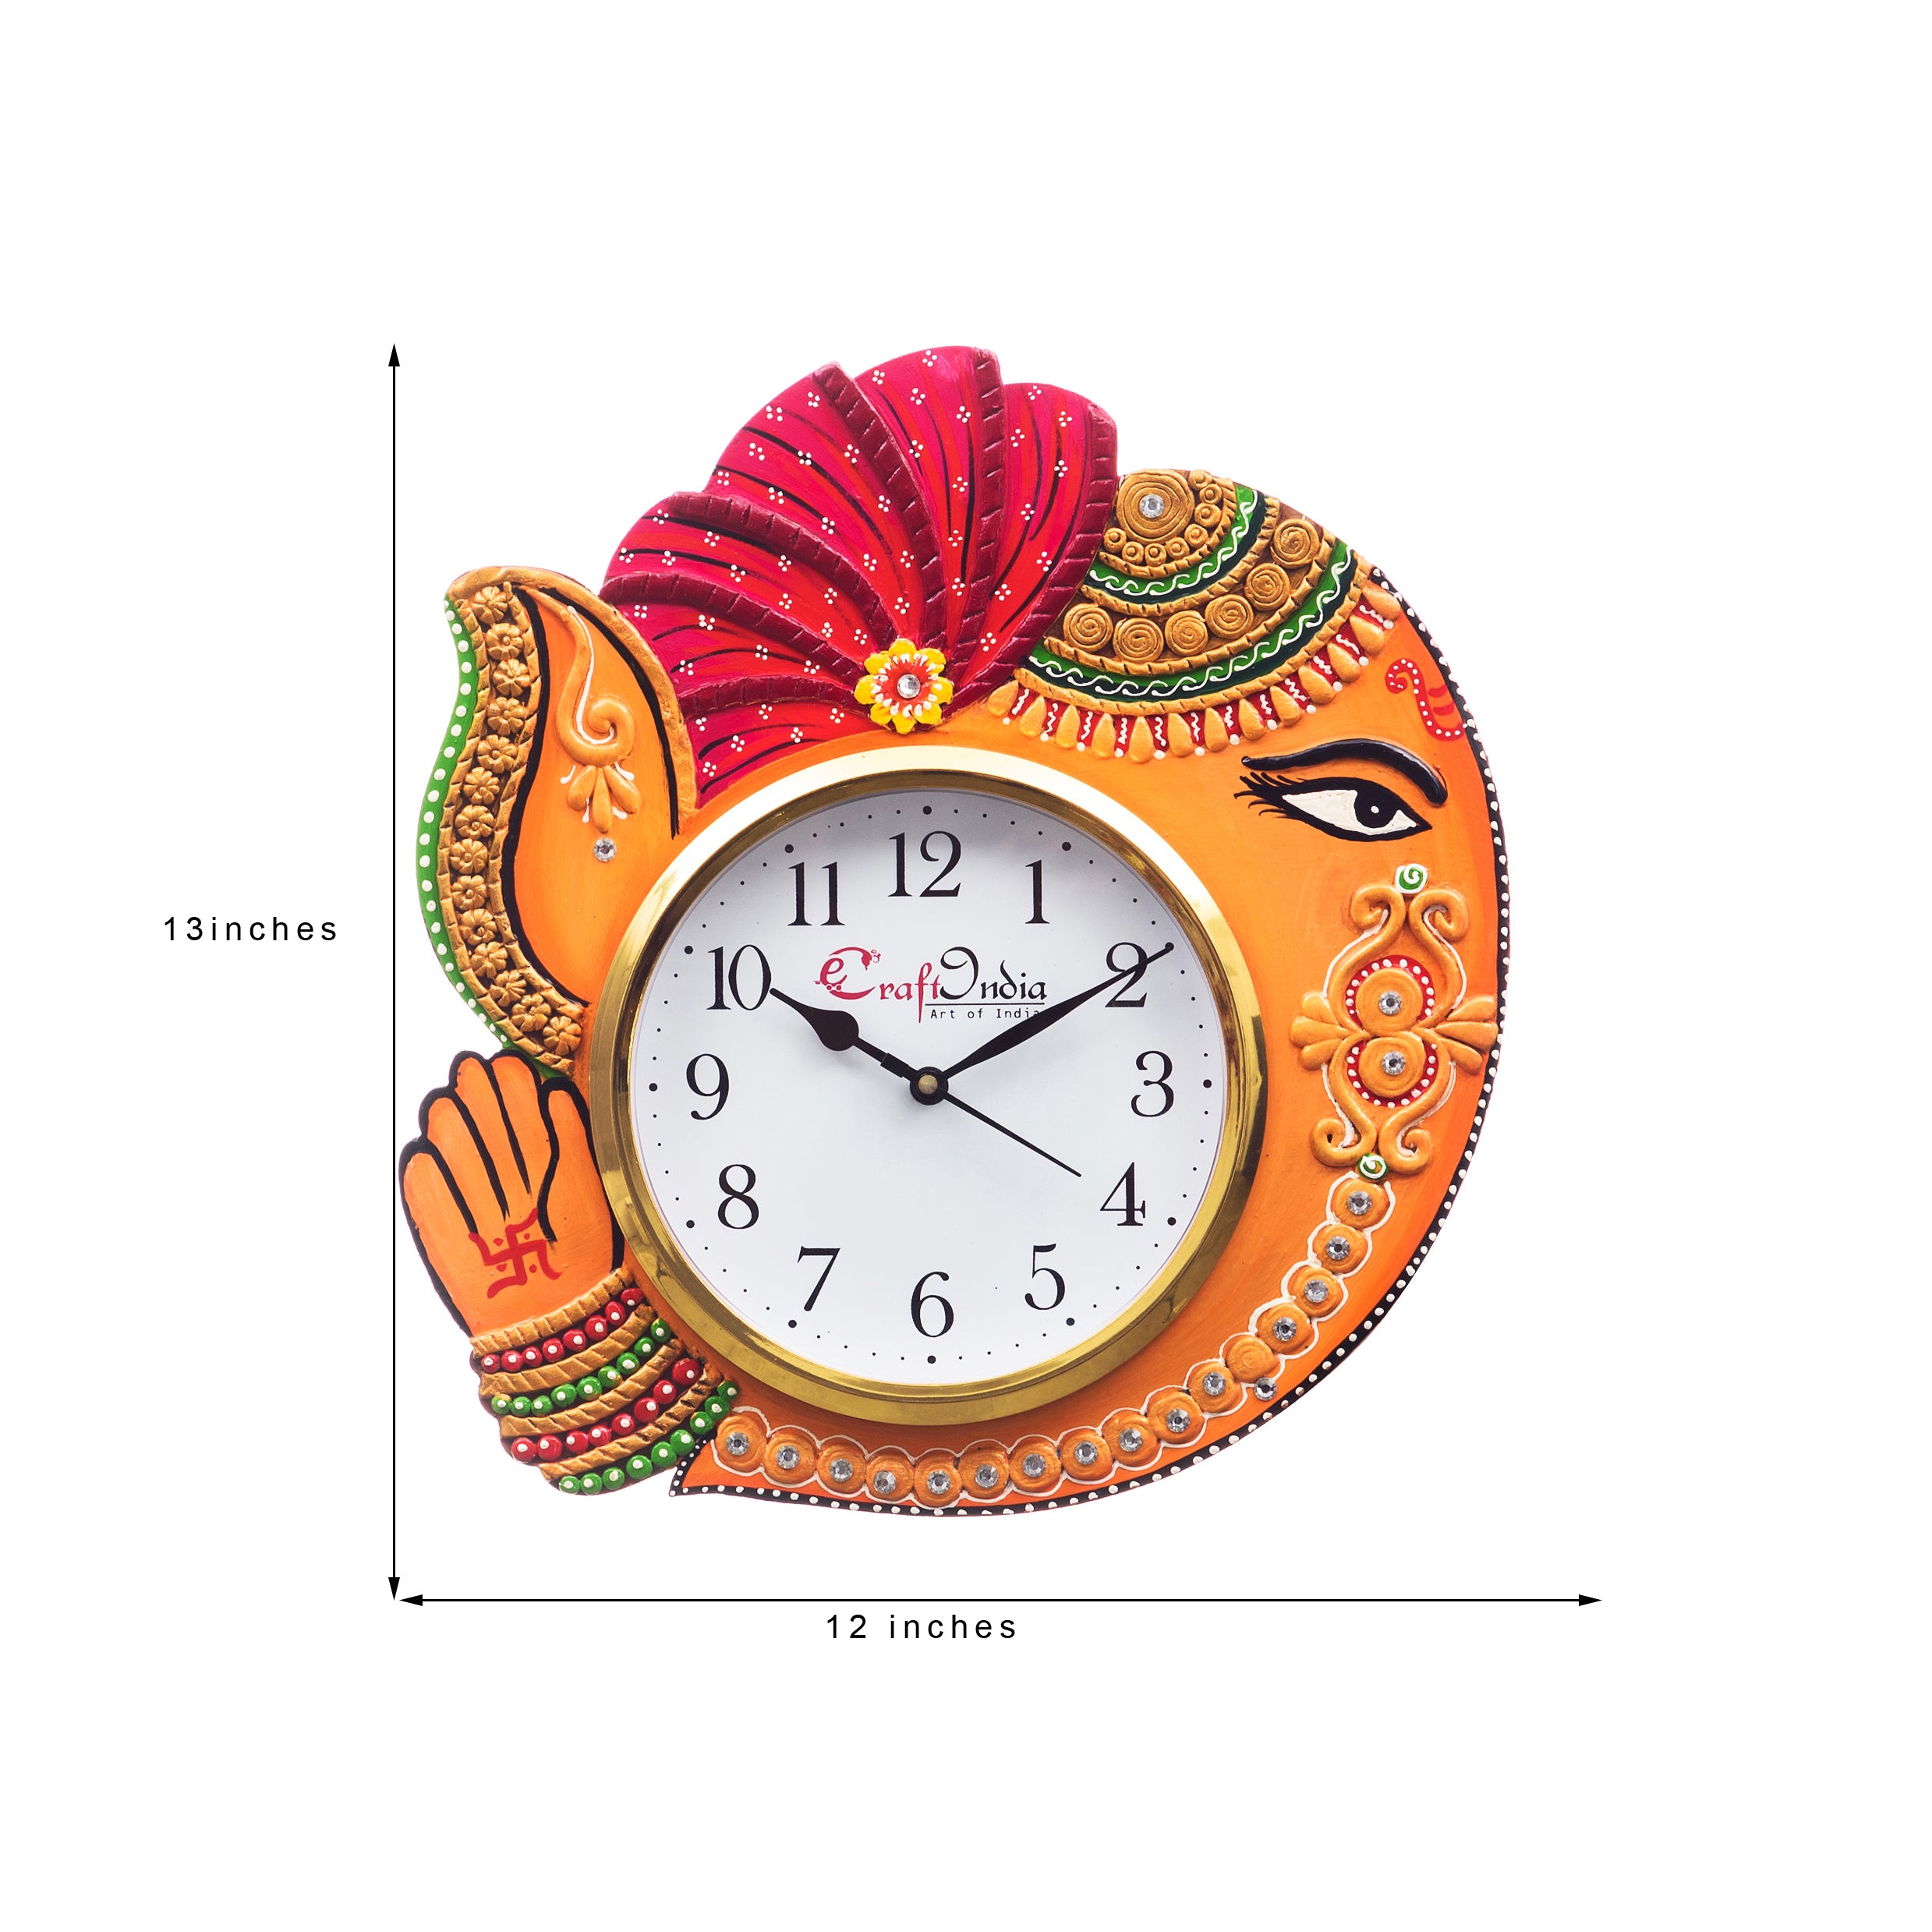 Decorative Handicrafted Paper Mache Lord Ganesha Wall Clock 2